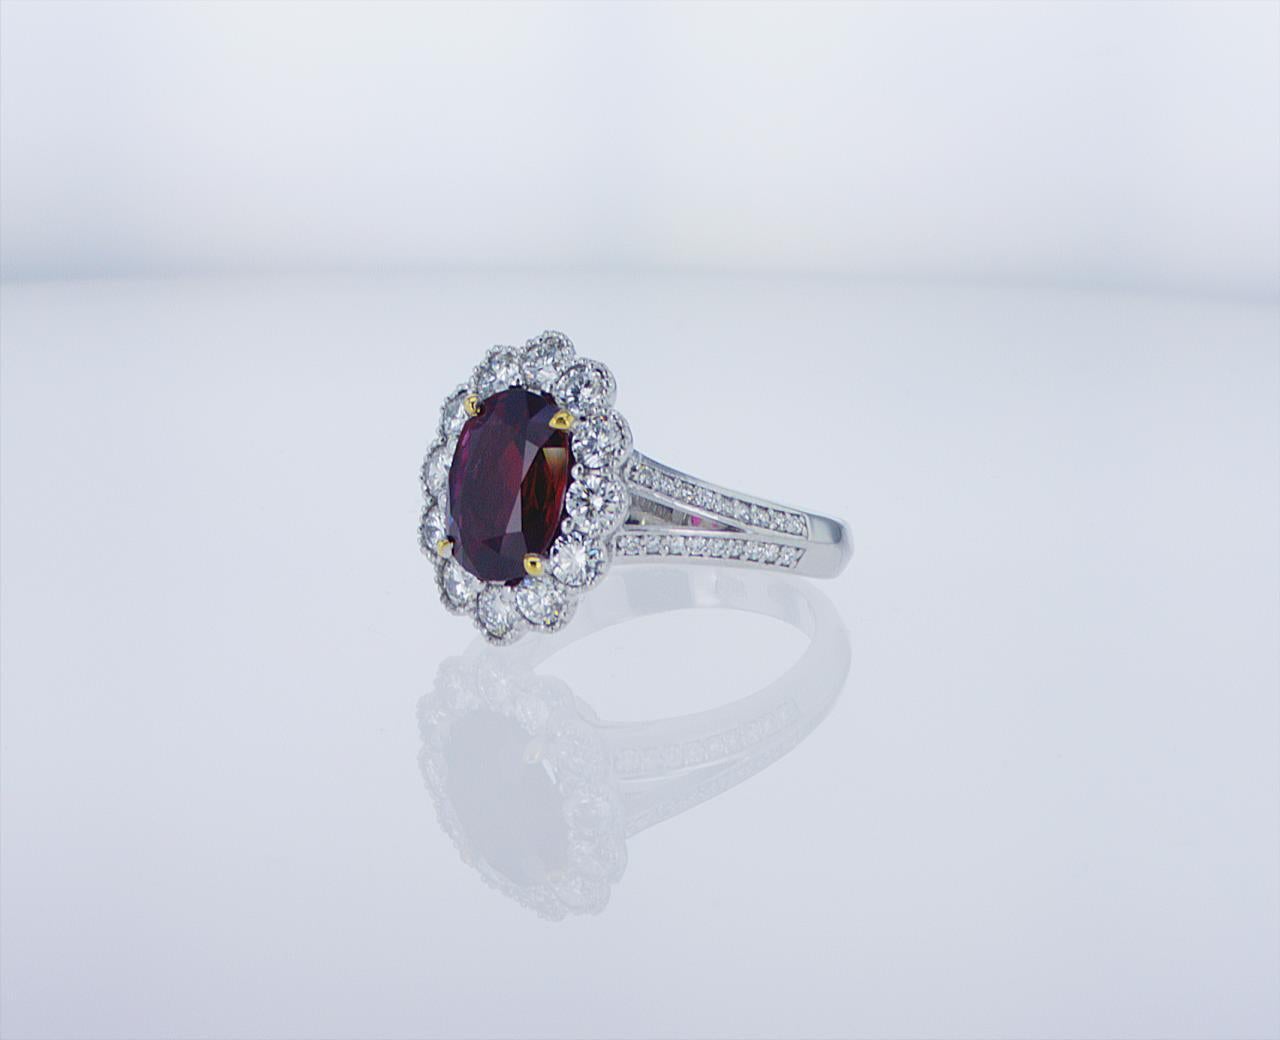 Oval Cut 2.03 Carat Oval Thai Ruby Ring W/1.08 Carat TW of Diamonds in 18k WG W/Palladium For Sale